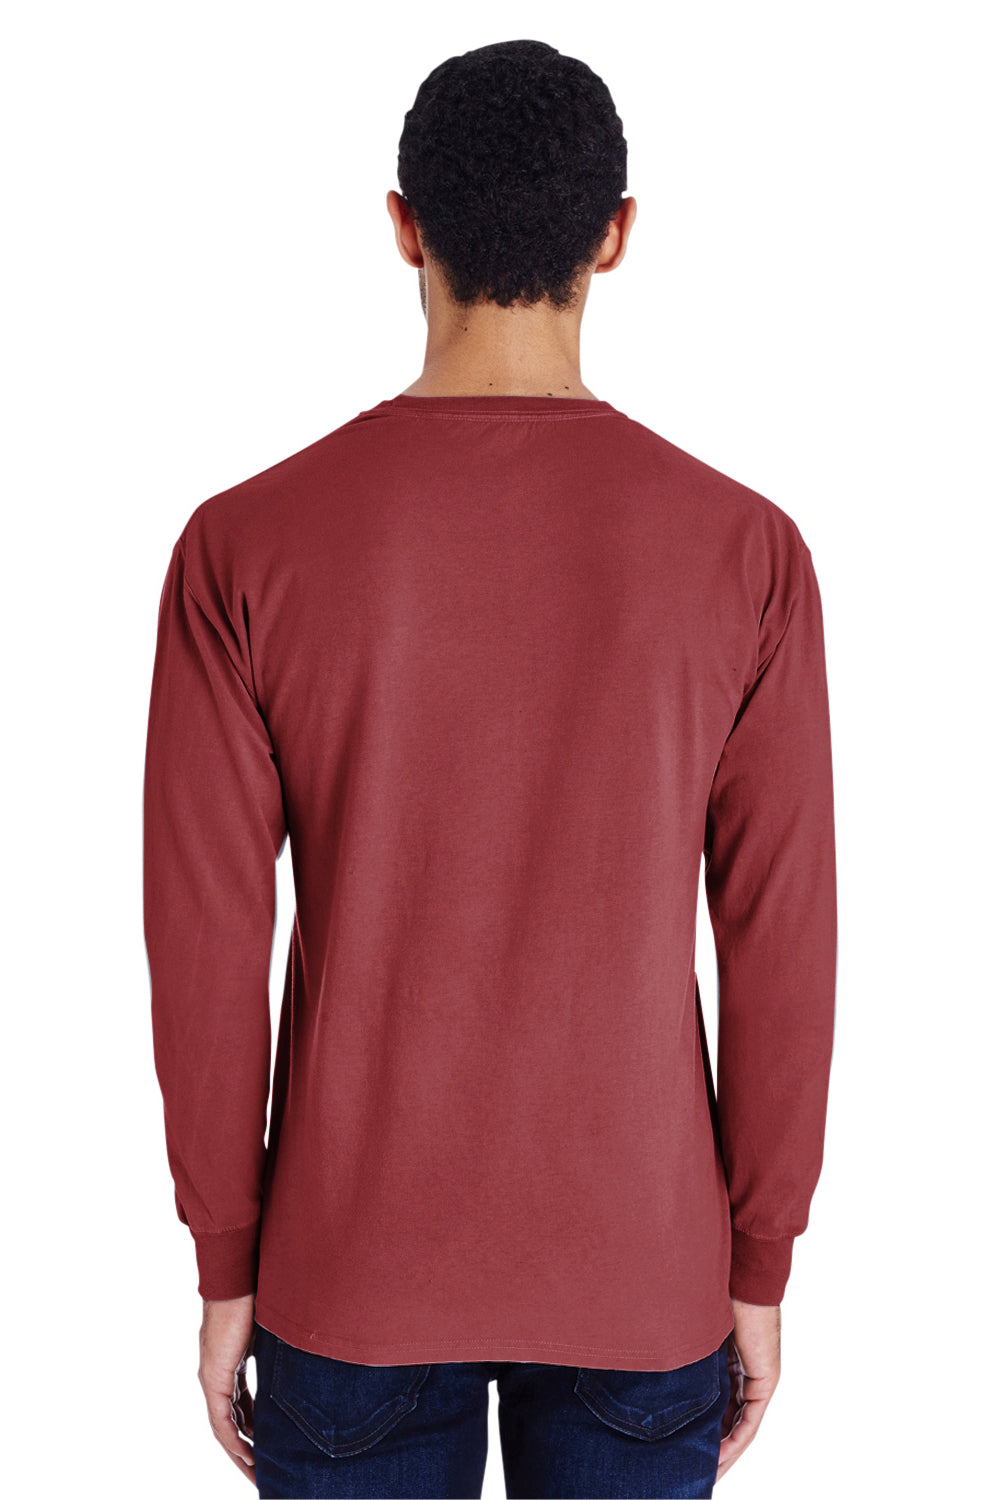 ComfortWash by Hanes GDH200 Long Sleeve Crewneck T-Shirt Cayenne Red Back